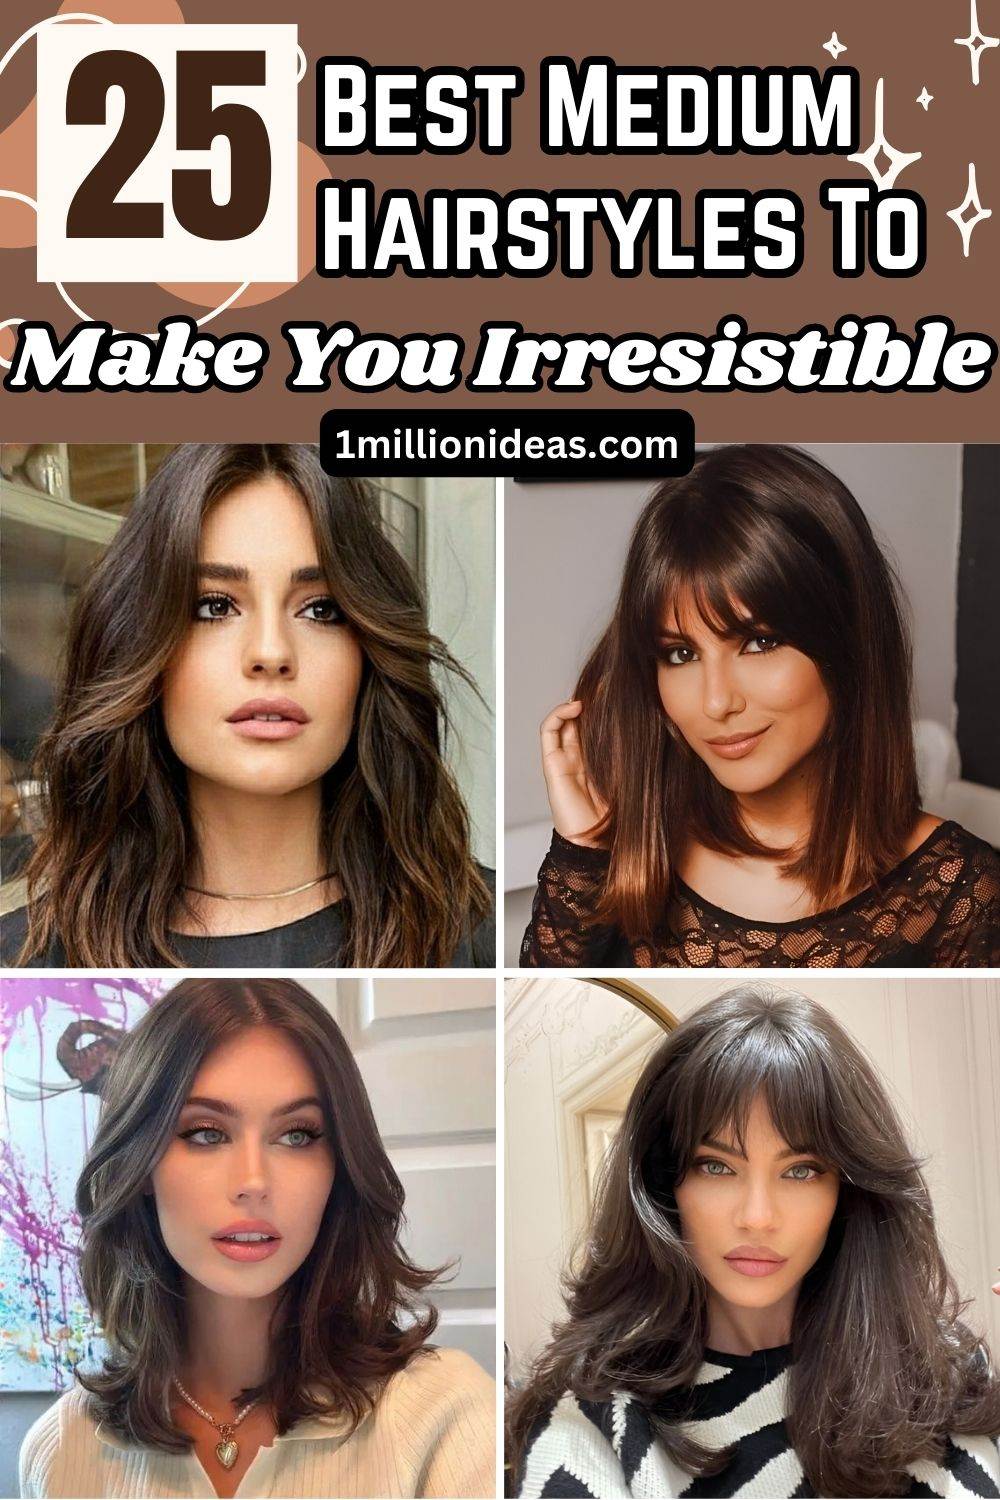 25 Best Medium Hairstyles To Make You Irresistible - 161